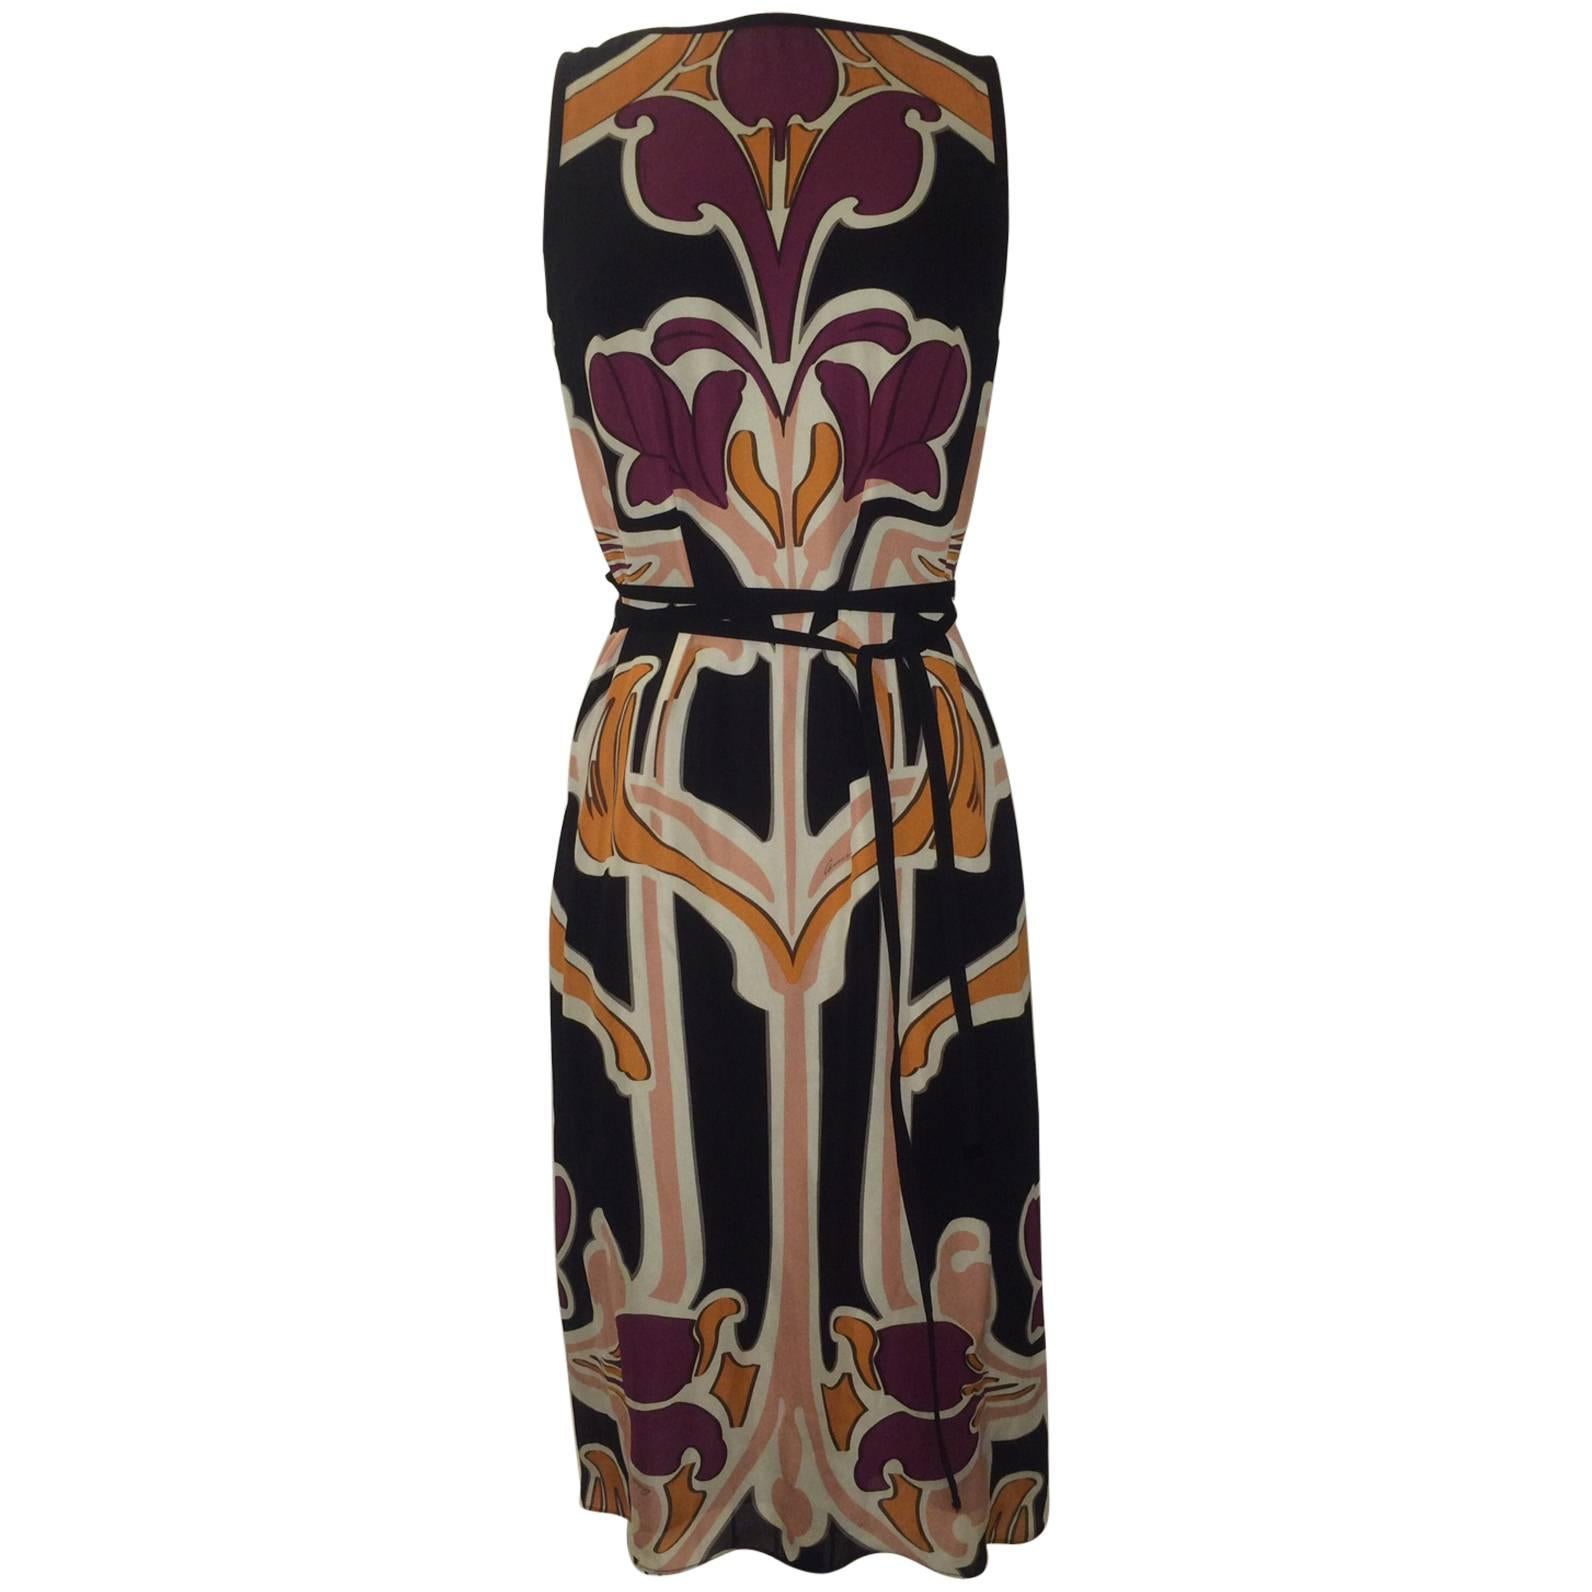 New 2014 Gucci Art Nouveau Erte Floral Print Black and Multi Silk Shift Dress